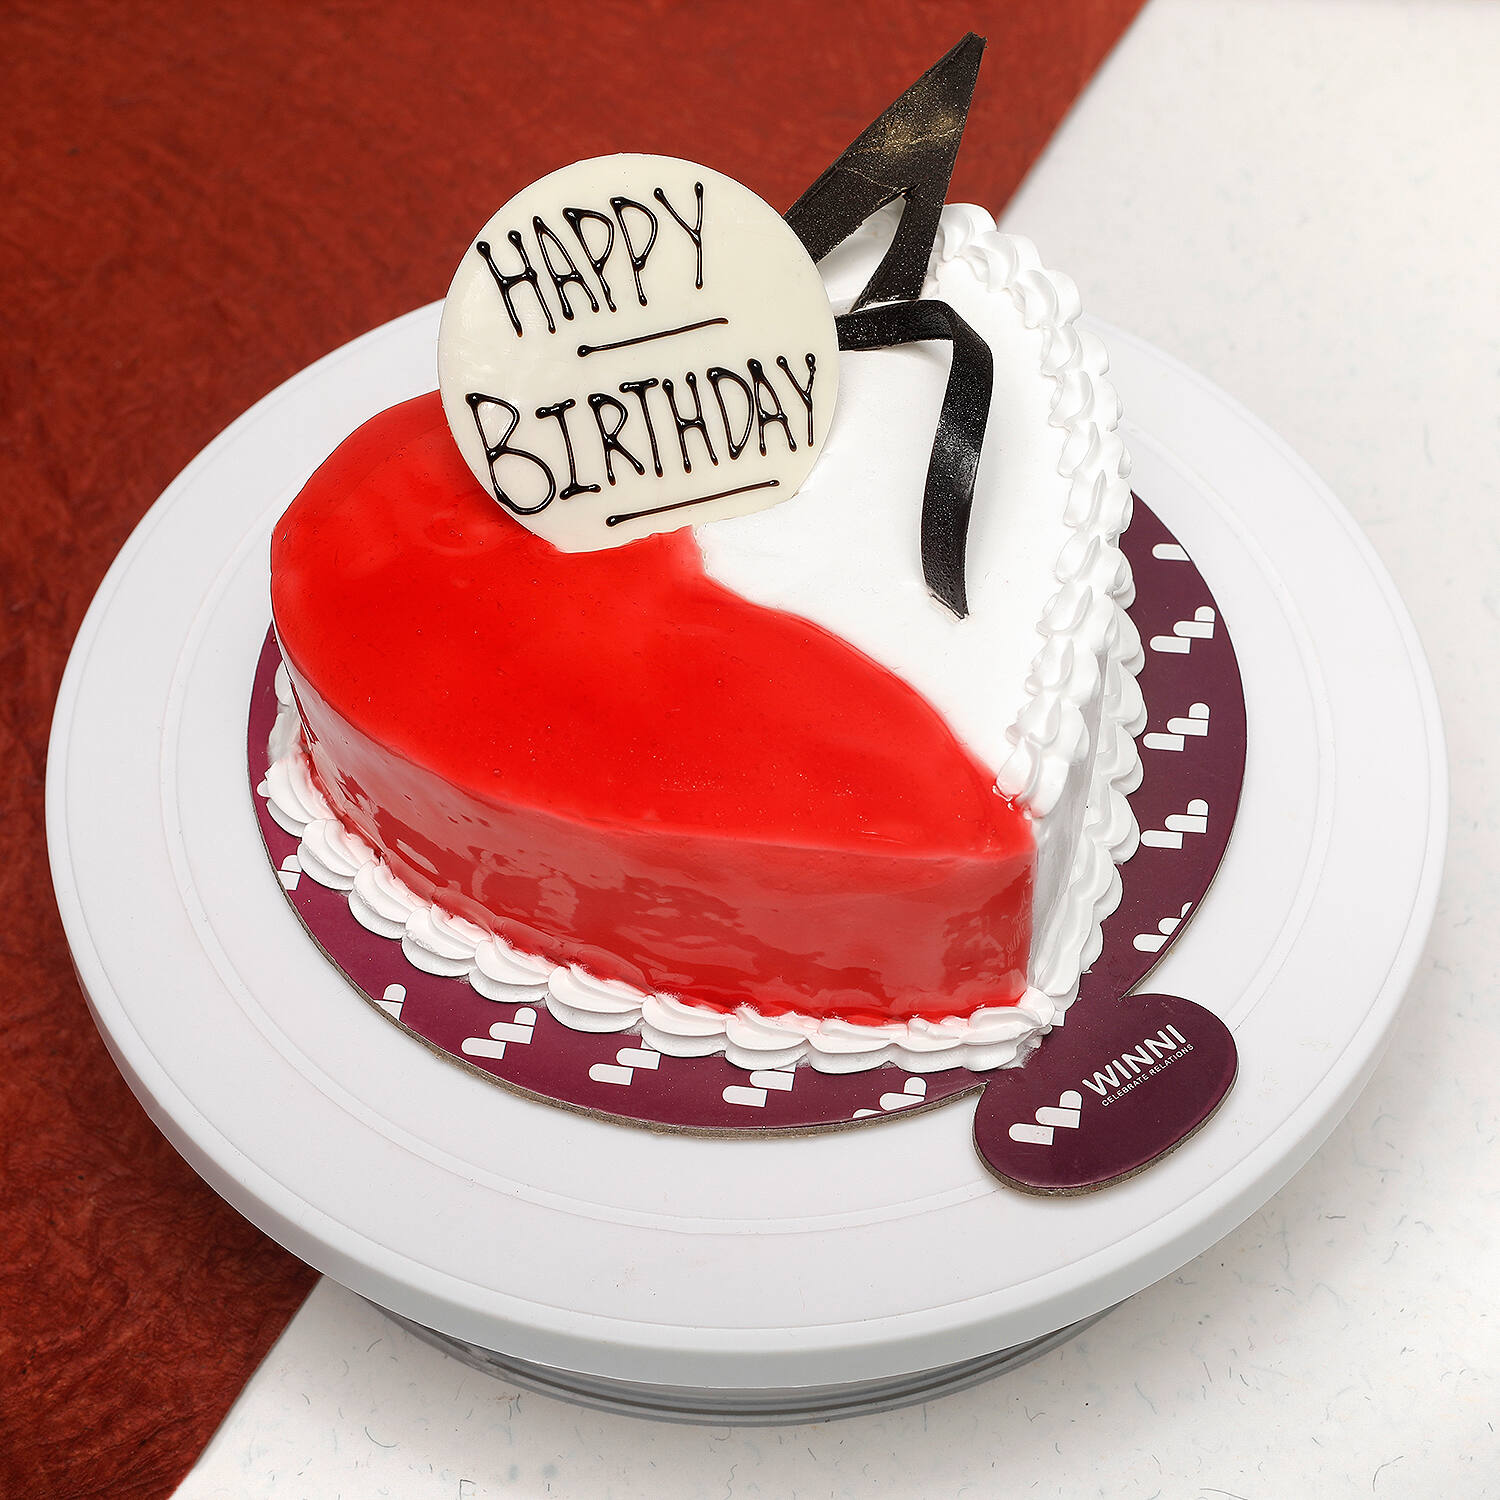 ALL Birthday Cakes Page 3 - Rashmi's Bakery